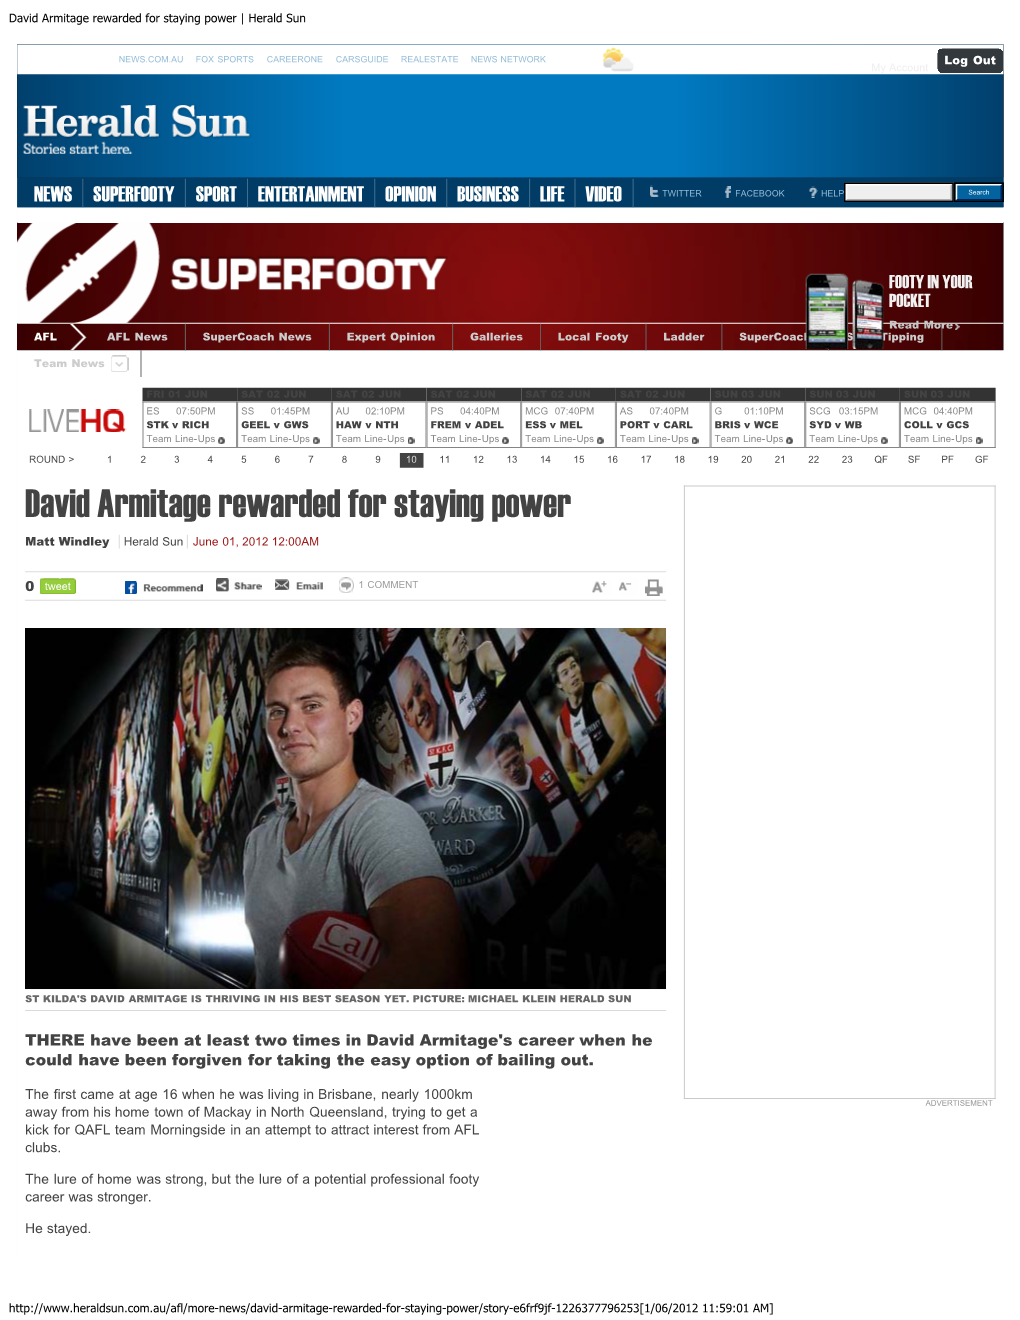 David Armitage Rewarded for Staying Power | Herald Sun